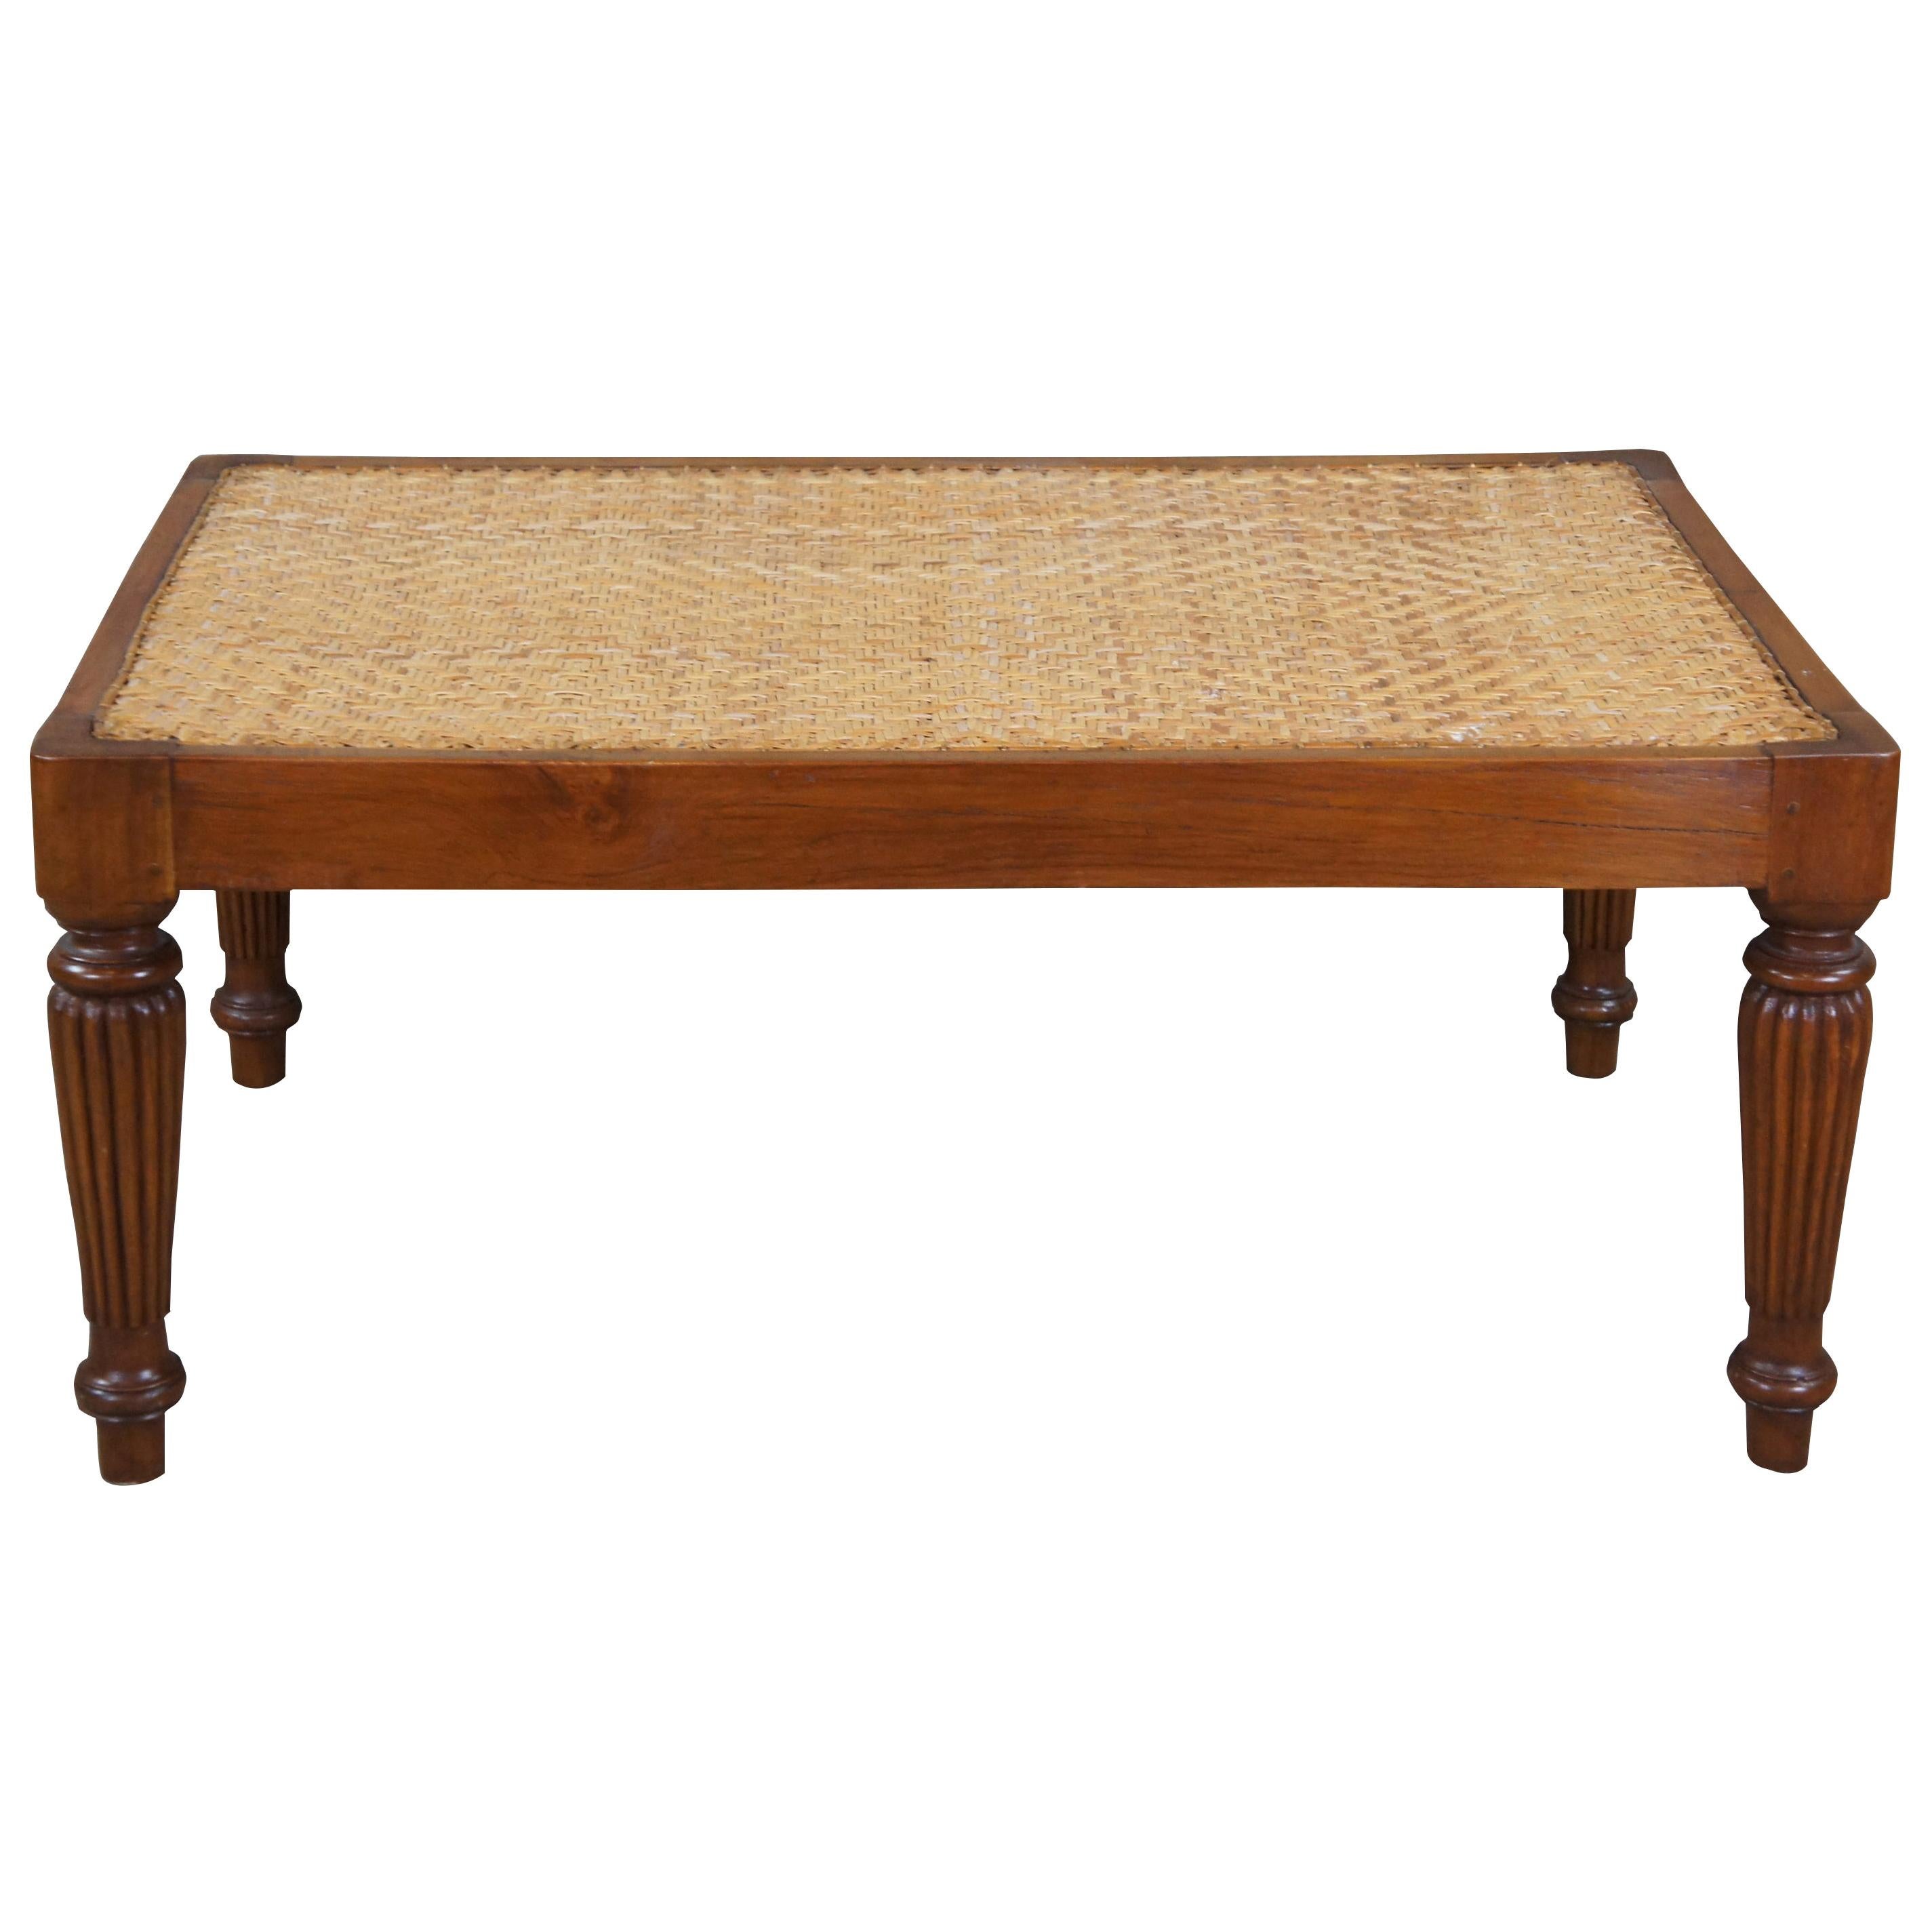 Vintage British Colonial Teak & Woven Rattan Plantation Coffee Table Bench Seat